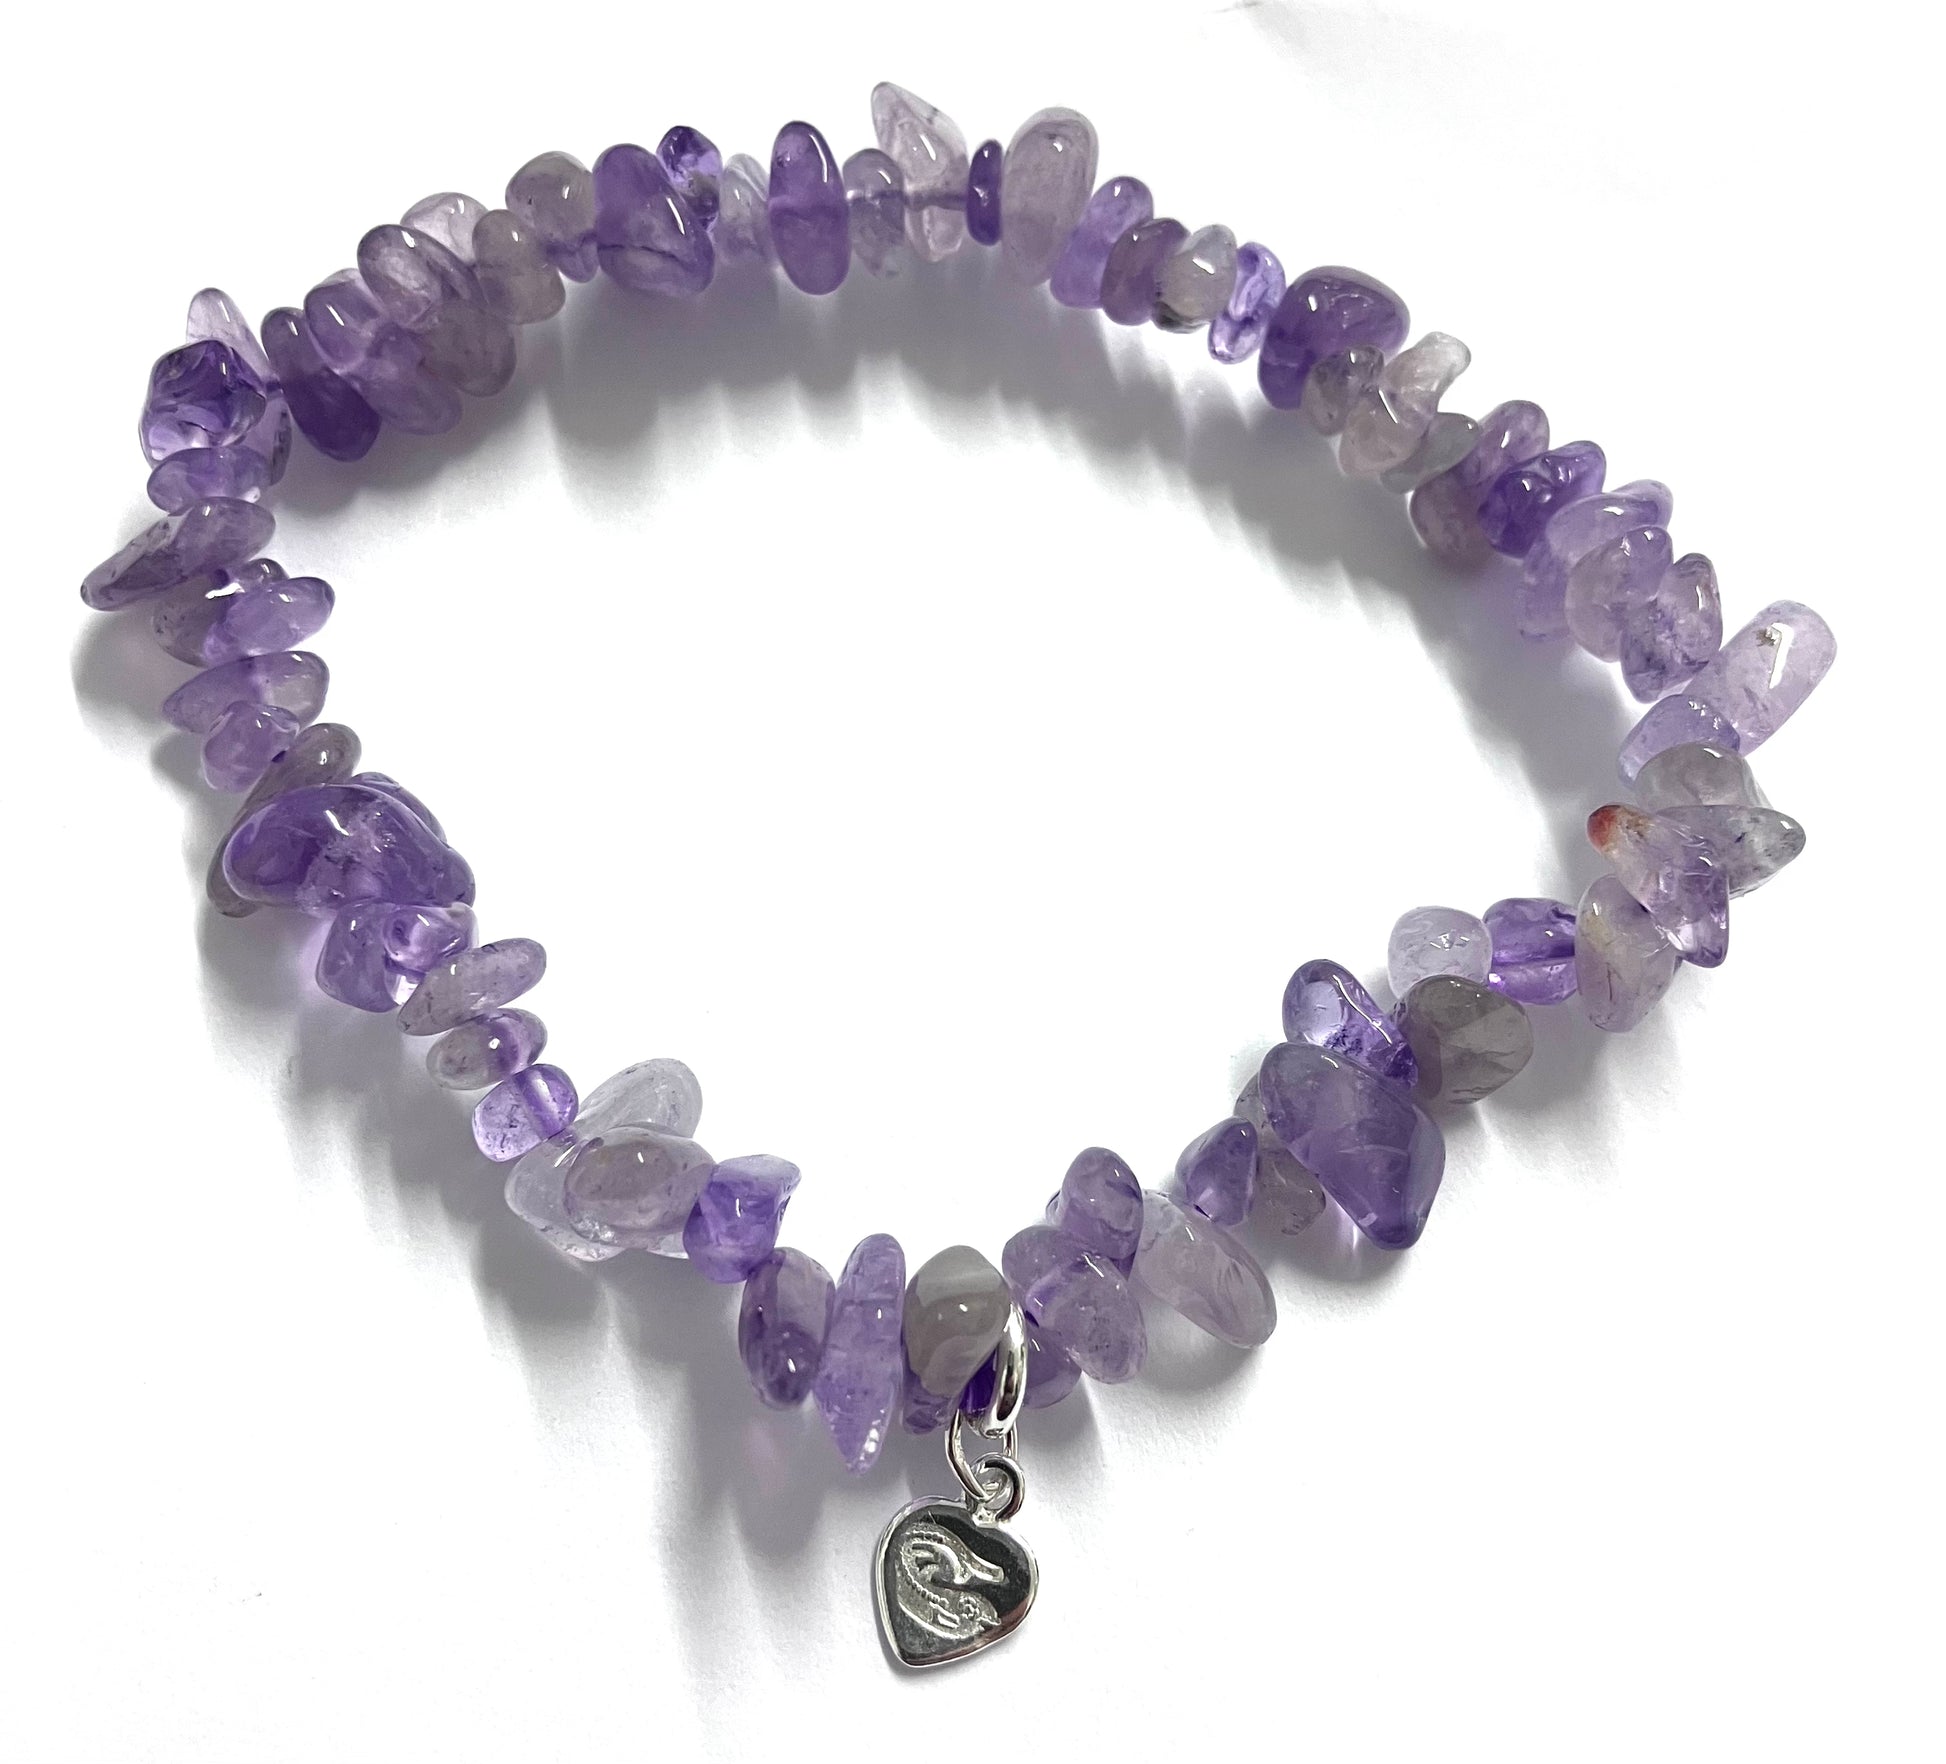 Lavender amethyst gemstone bracelet